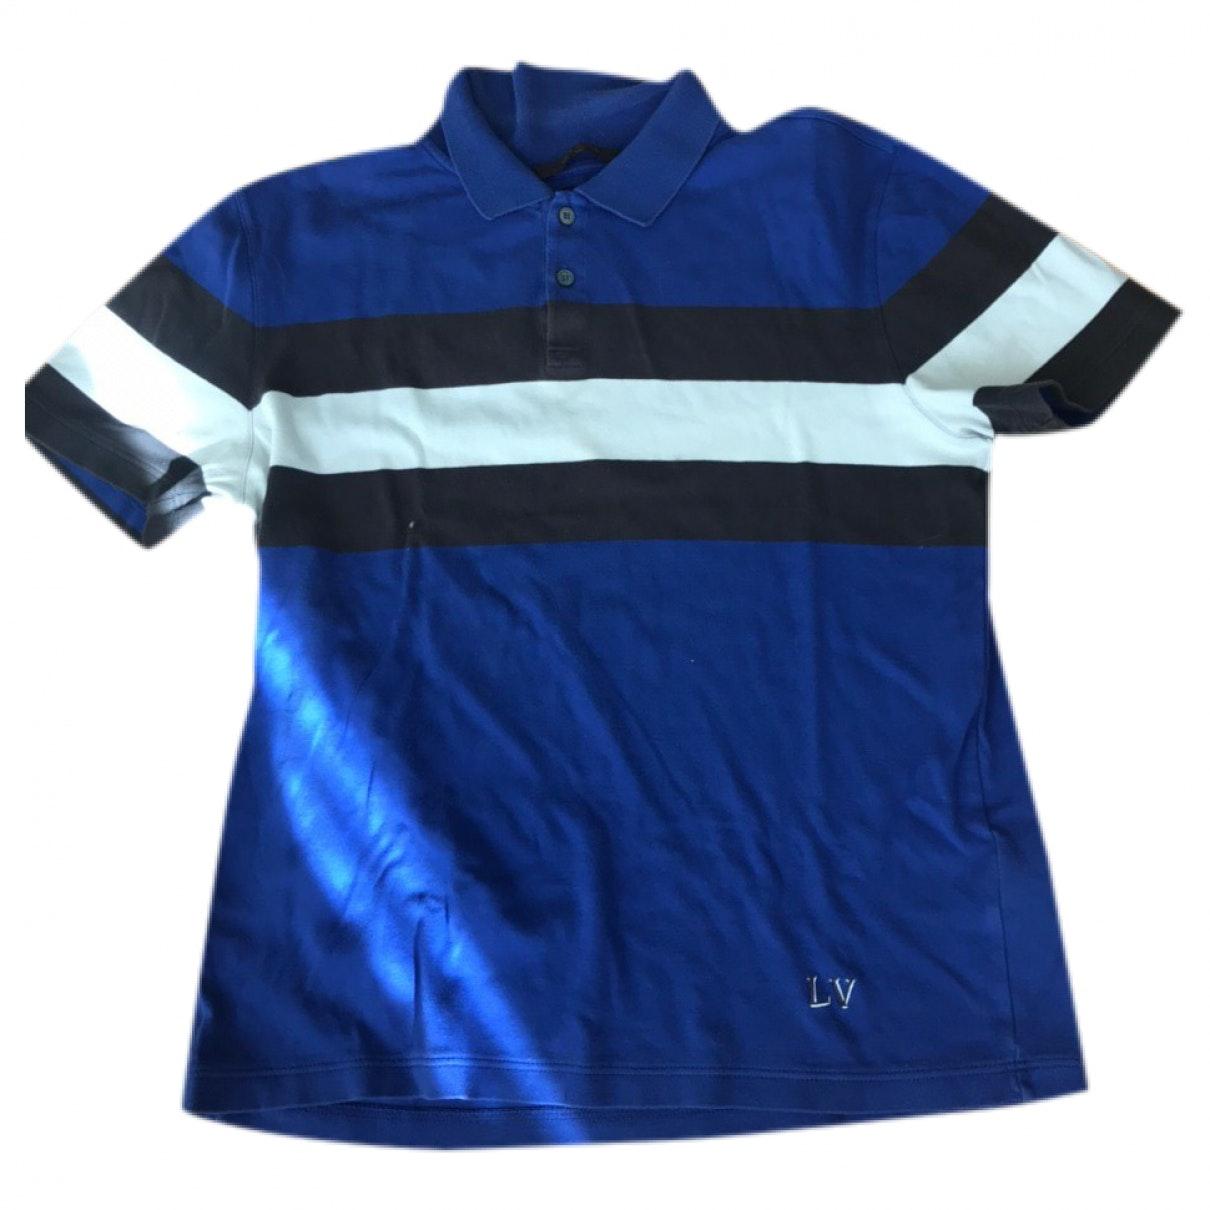 Louis Vuitton Cotton Polo Shirt in Blue for Men - Lyst